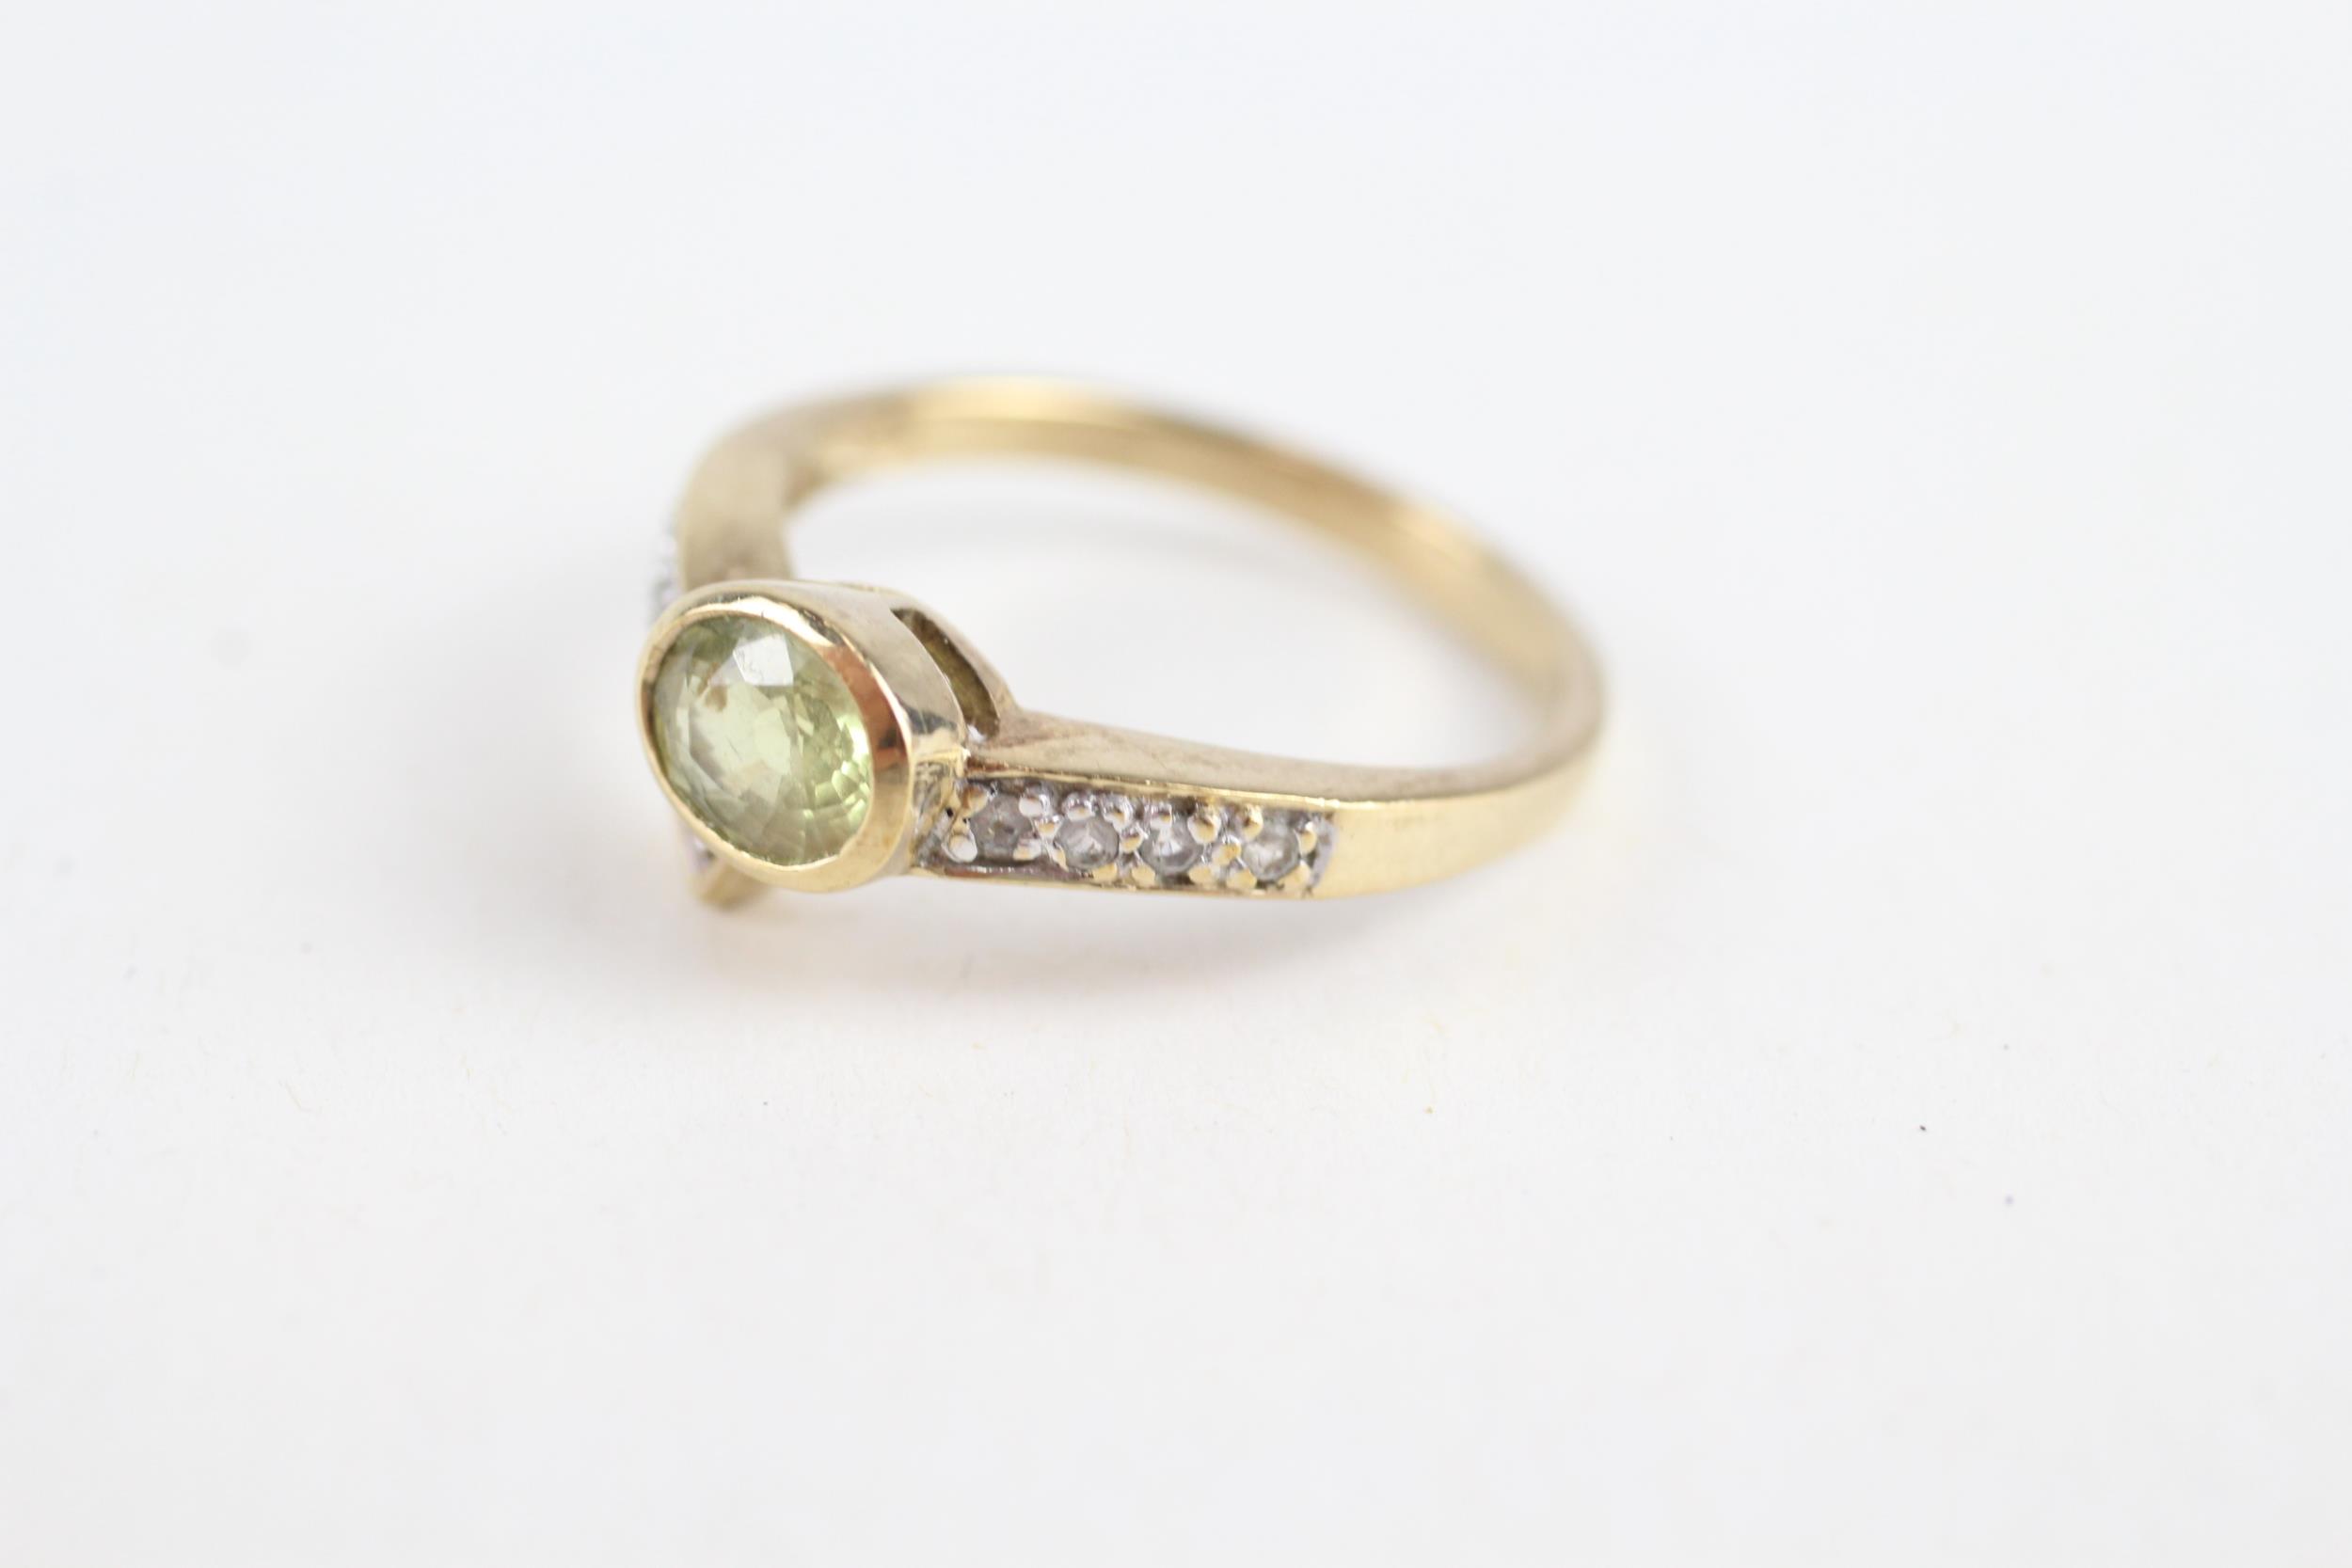 9ct gold green & white gemstone dress ring Size N 1/2 - 2.8 g - Image 3 of 4